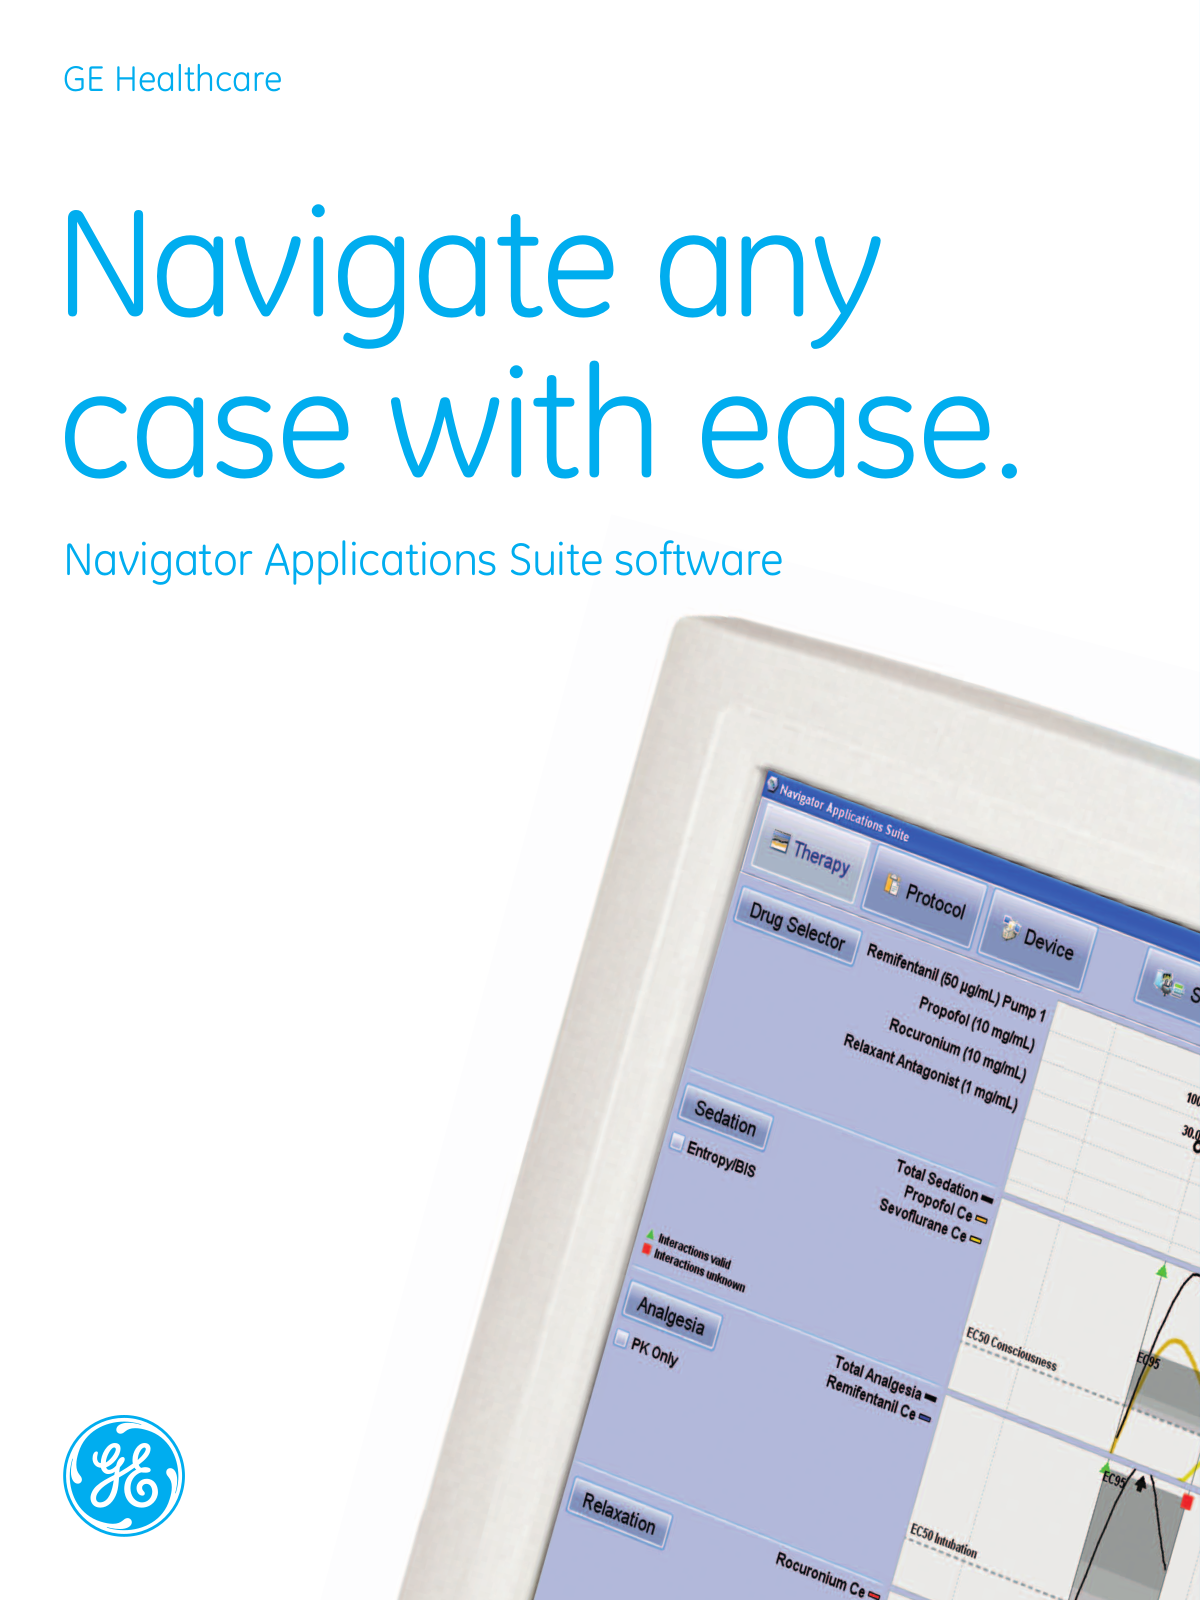 GE Healthcare Navigator Applications Suite Brochure